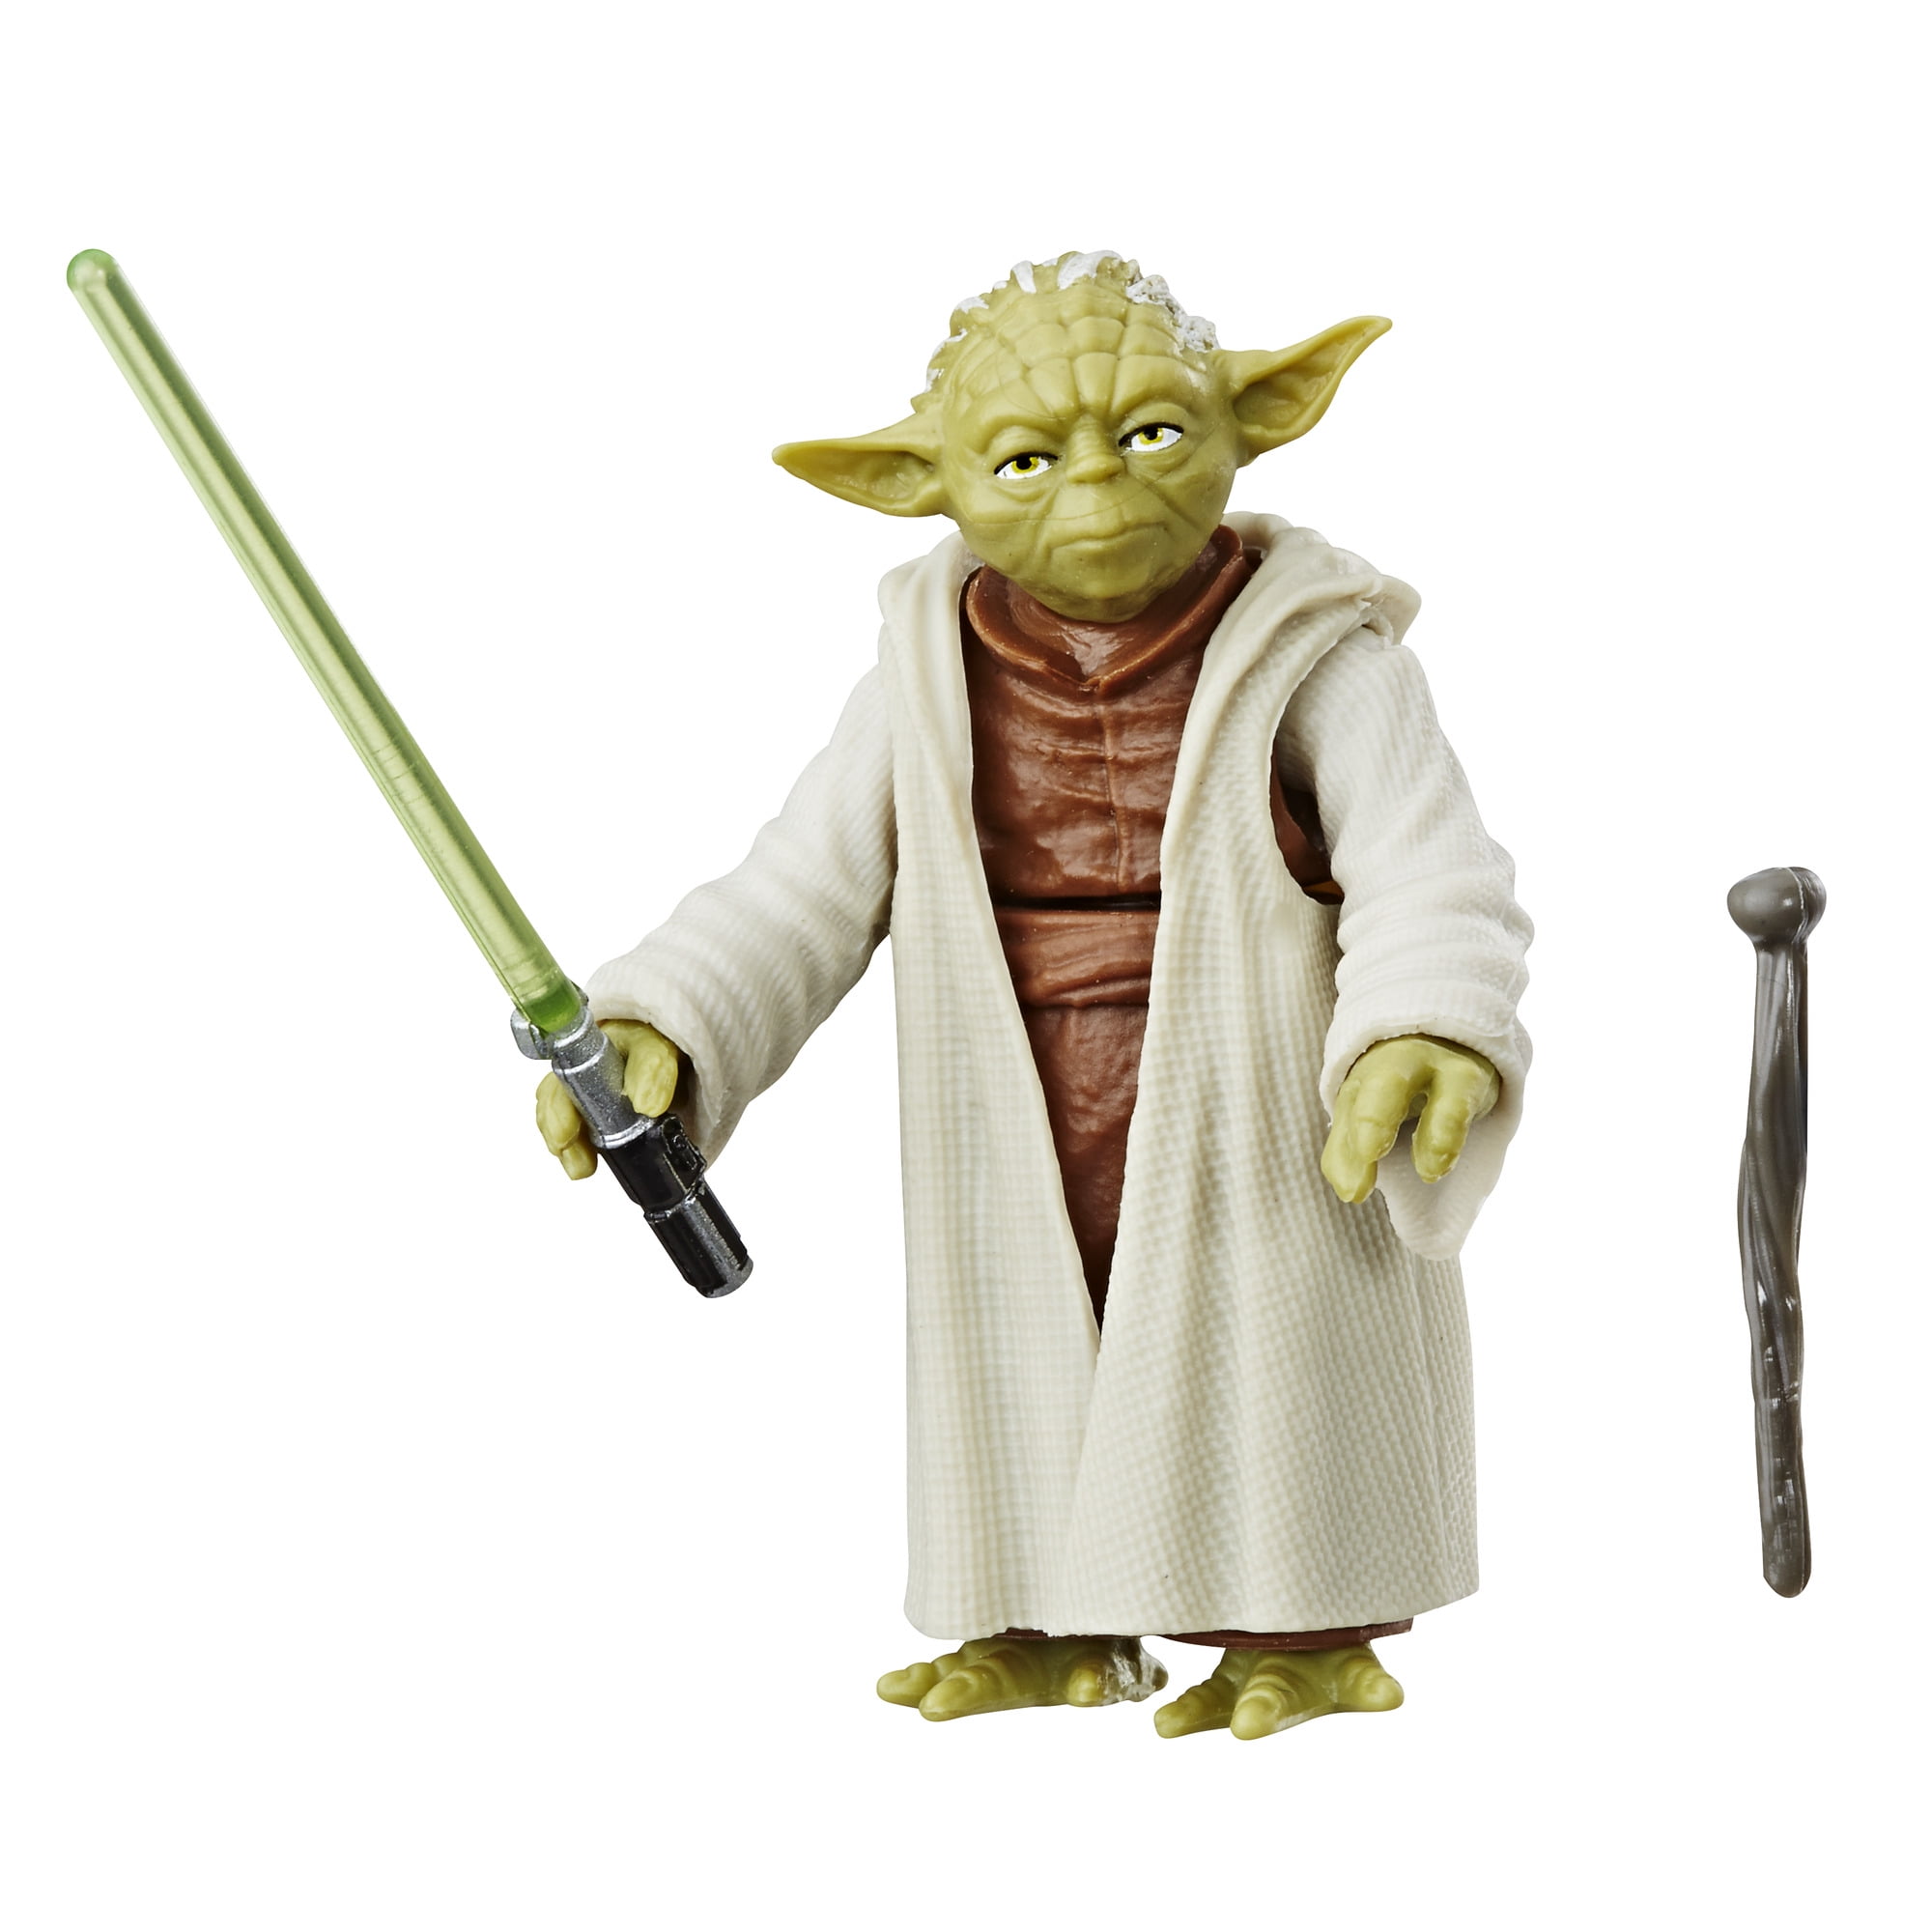 Yoda, Characters, Star Wars Figures